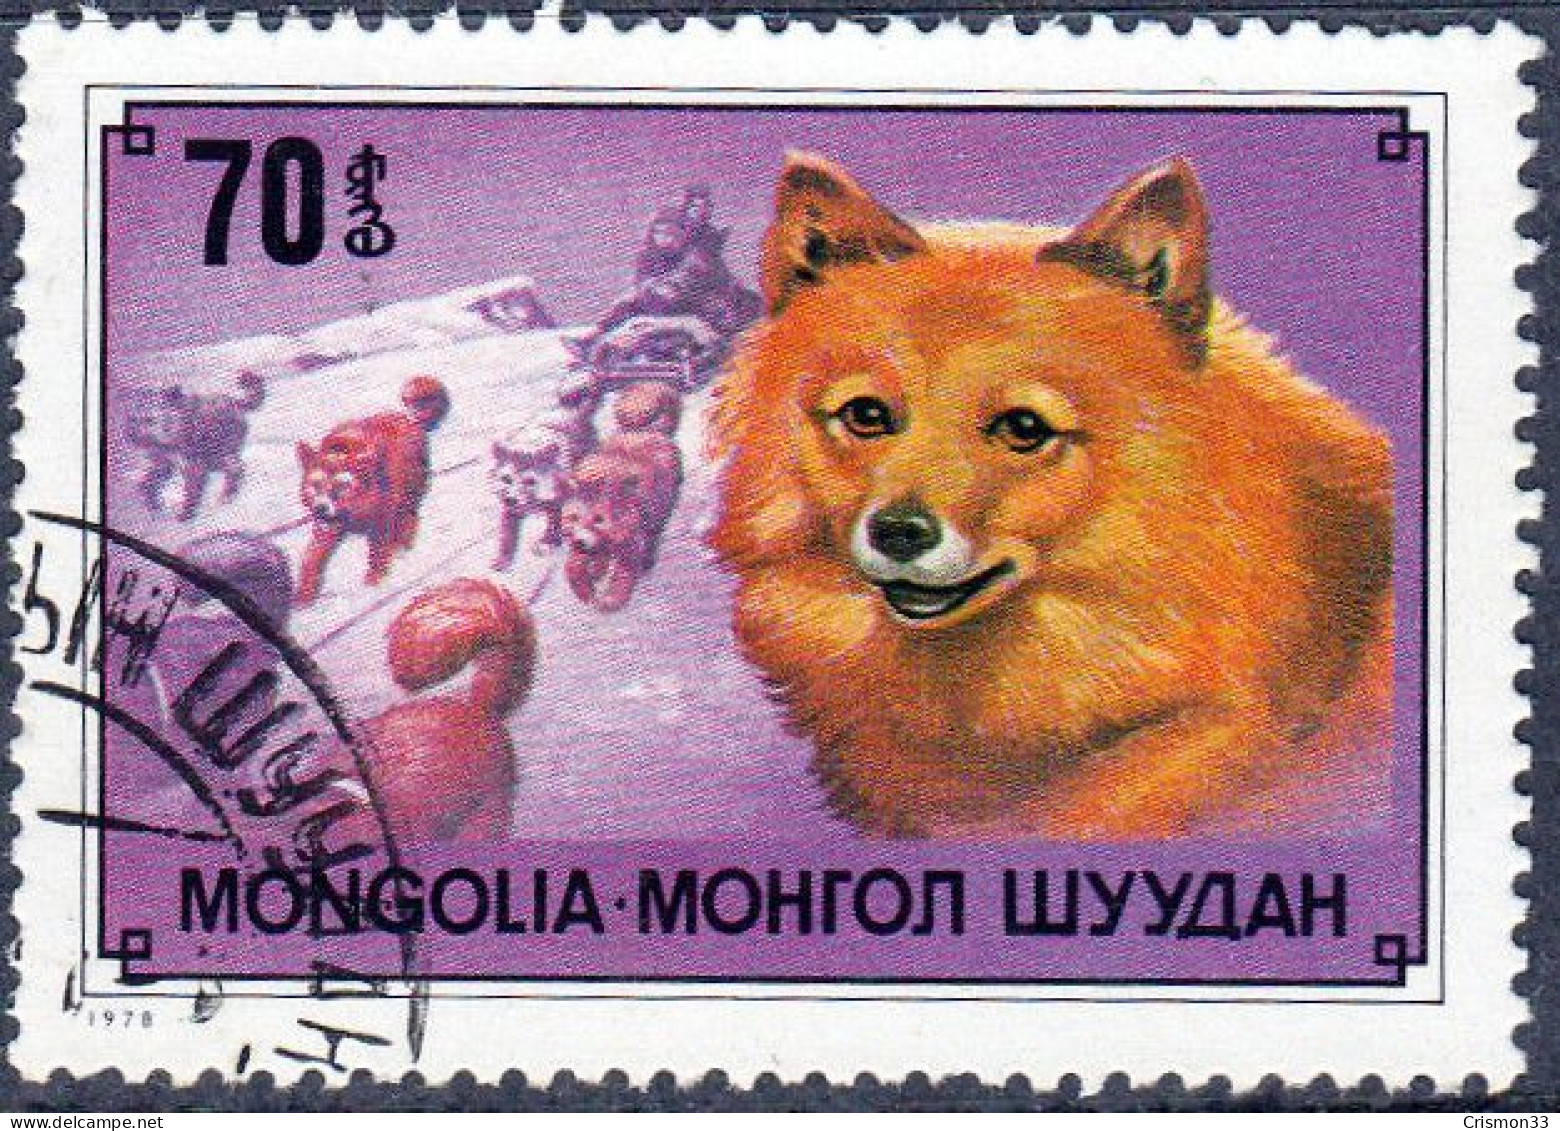 1978 - MONGOLIA - PERROS - SAMOYEDO - MICHEL 1177 - Mongolia